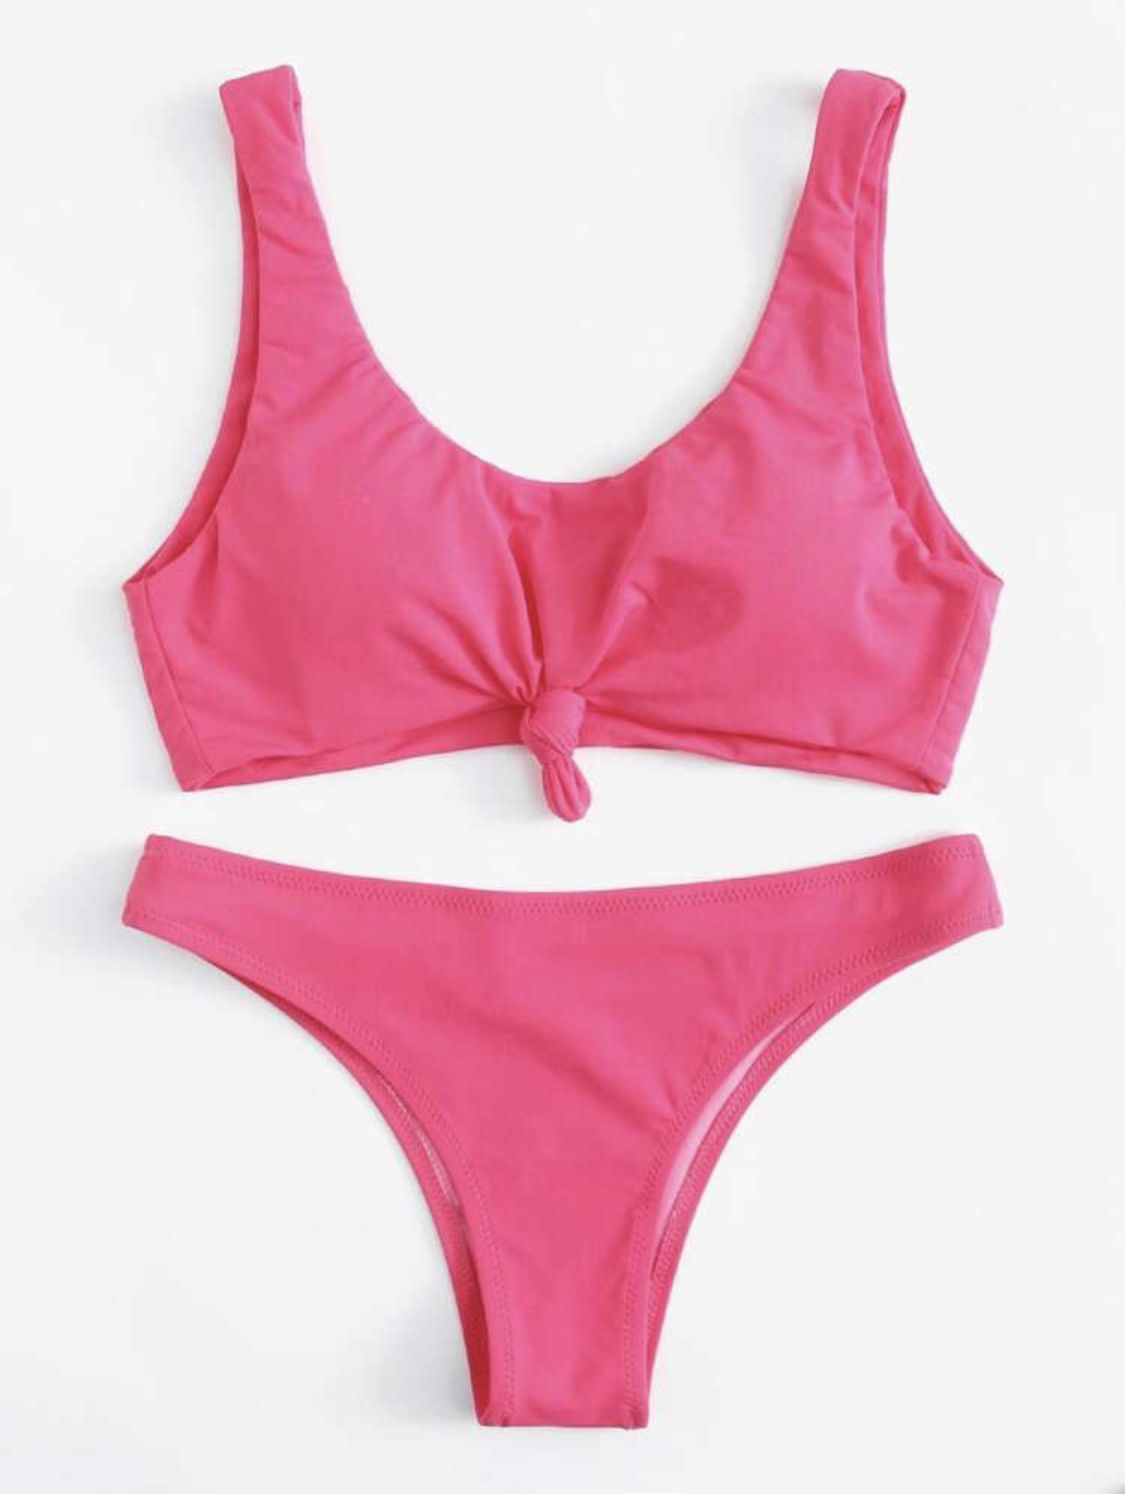 Hot pink bikini set